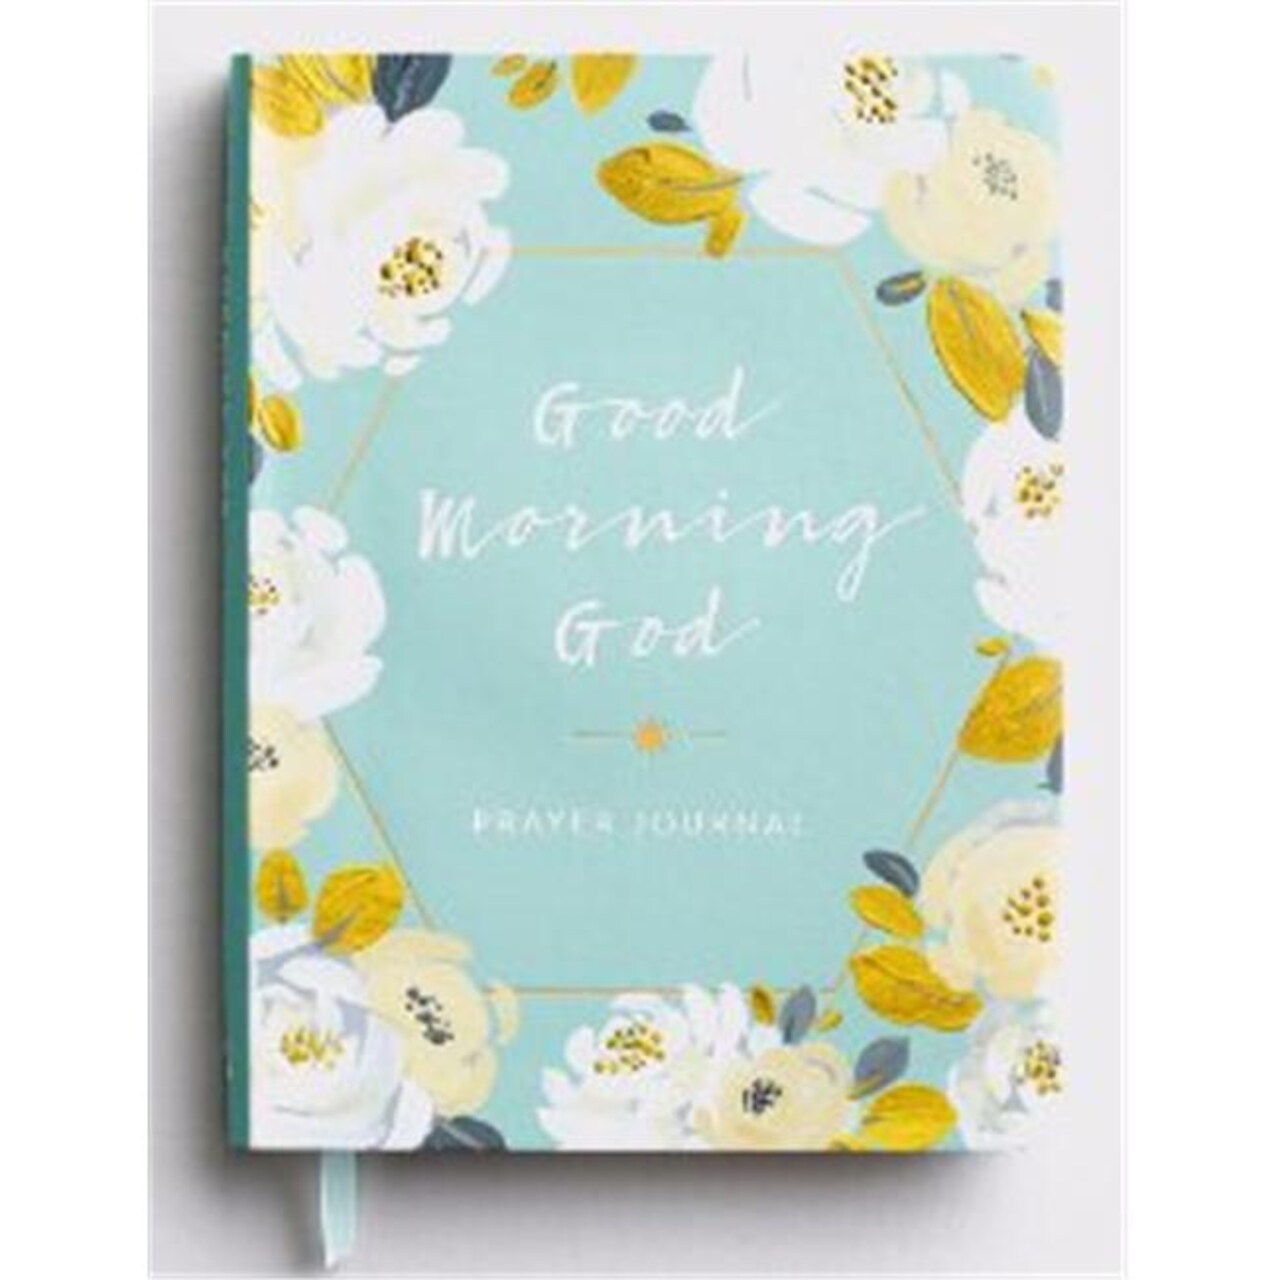 Dayspring Cards 157598 Journal - Good Morning God Prayer Journal